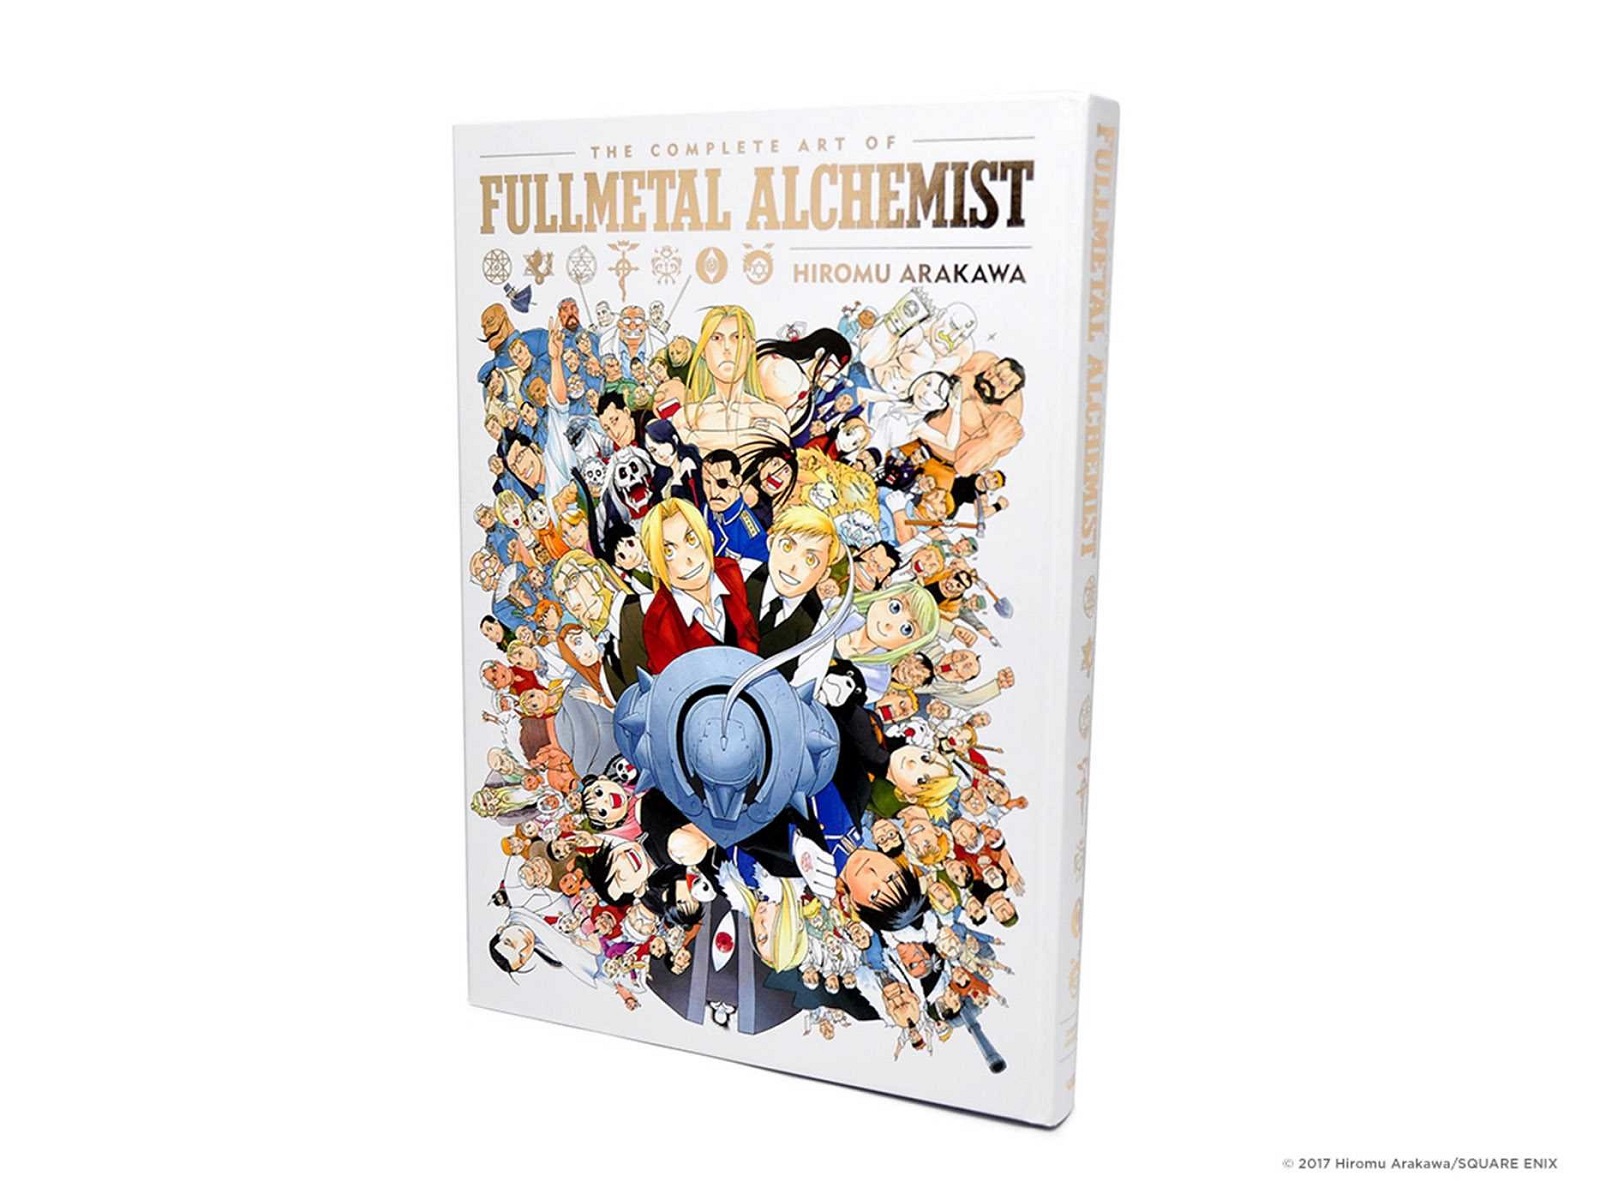 The Complete Art of Fullmetal Alchemist (Hardcover) image count 1